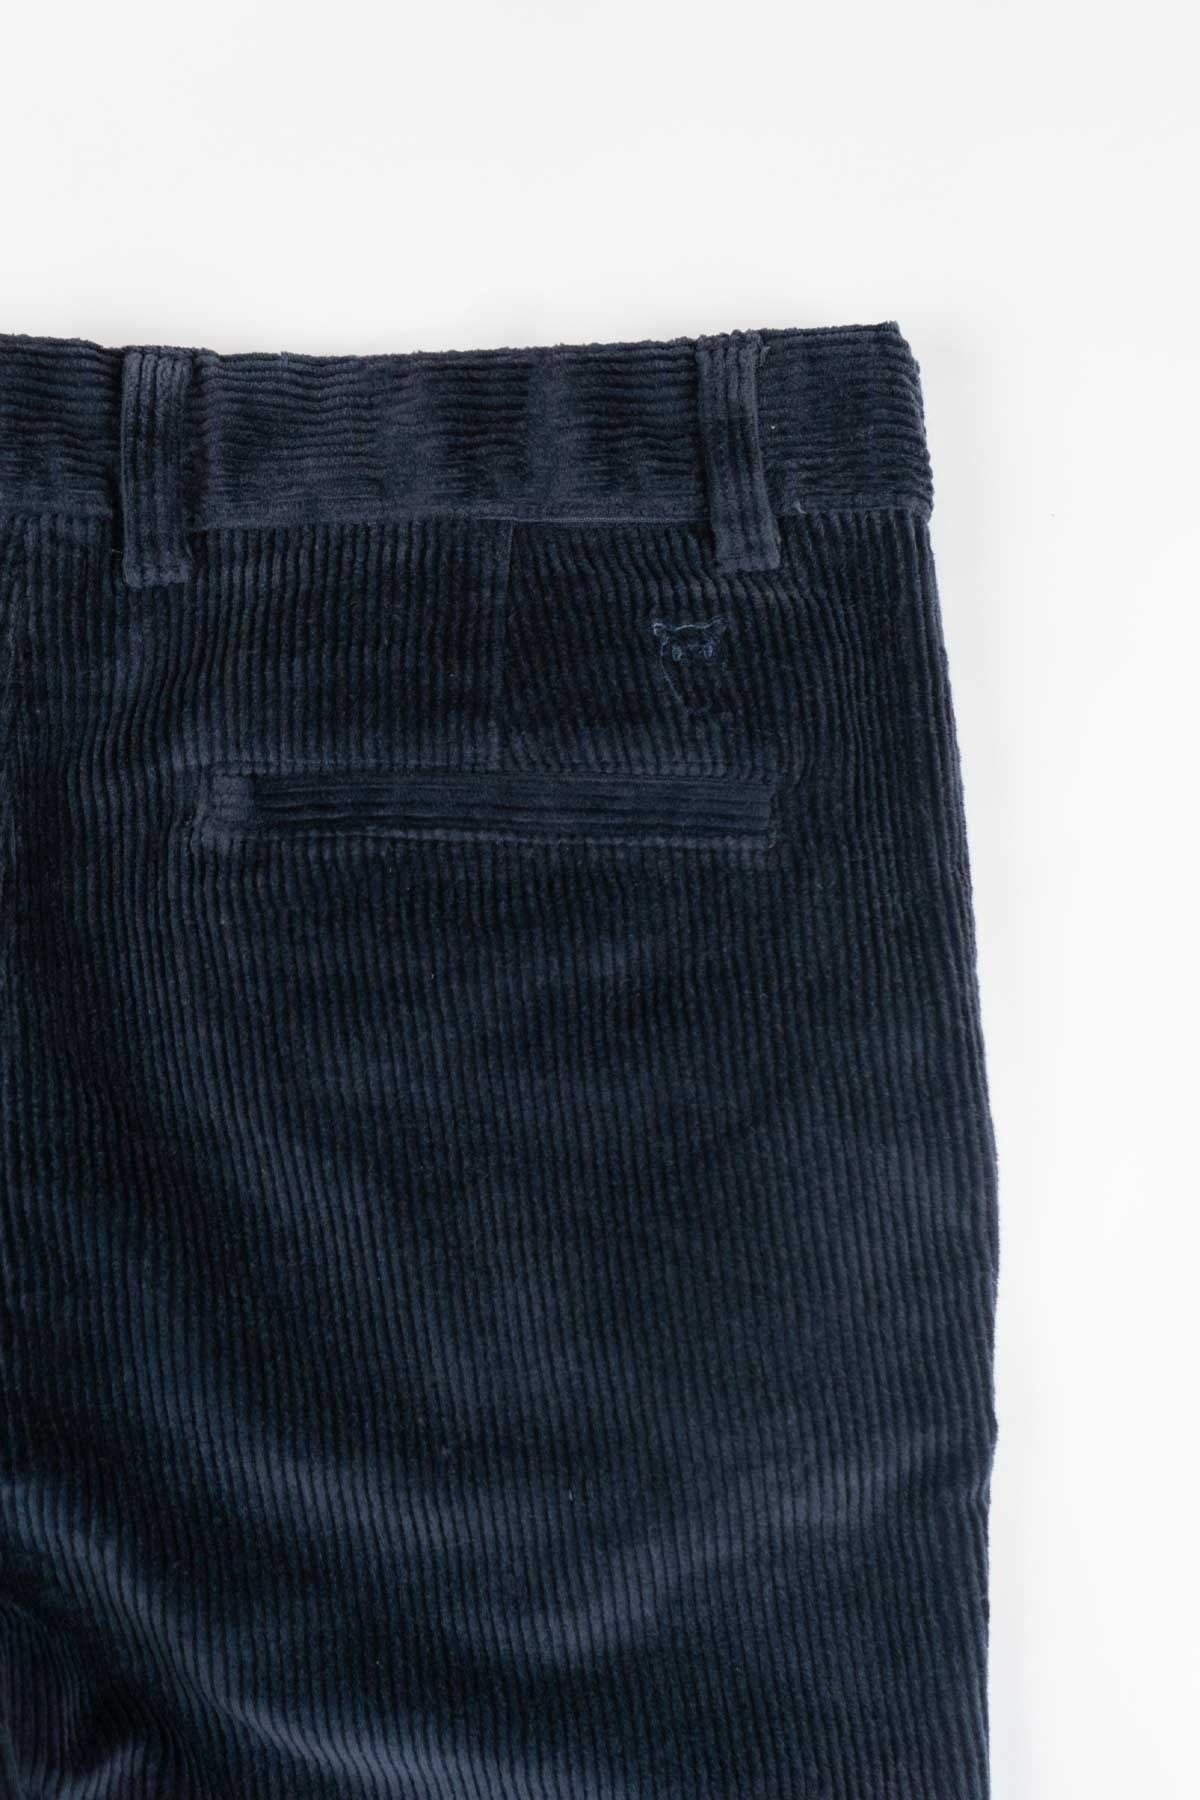 Pantalon Chuck regular 8-wales cord - Knowledge cotton apparel